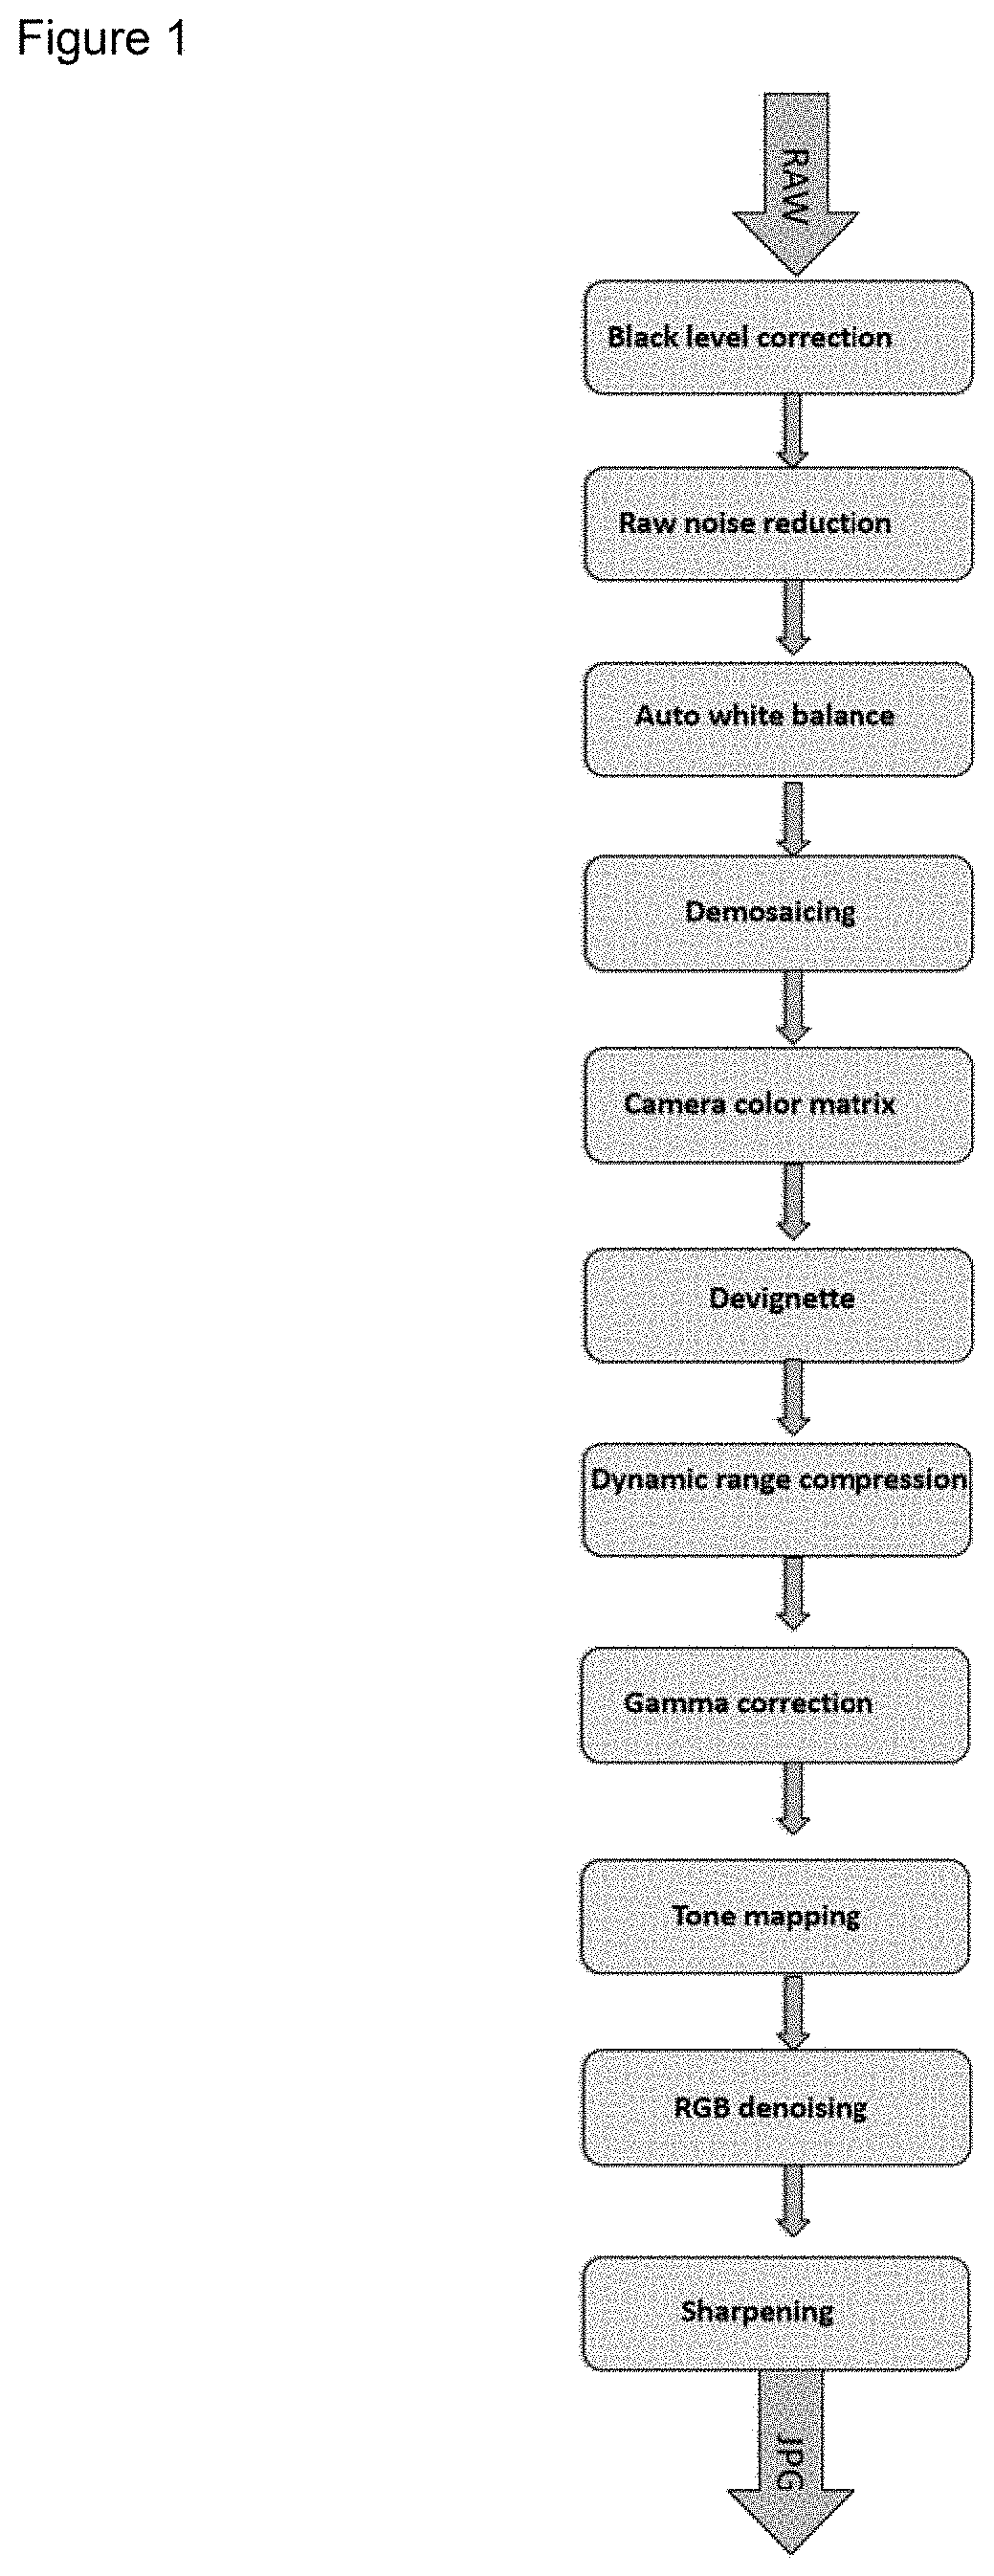 Image processor and method